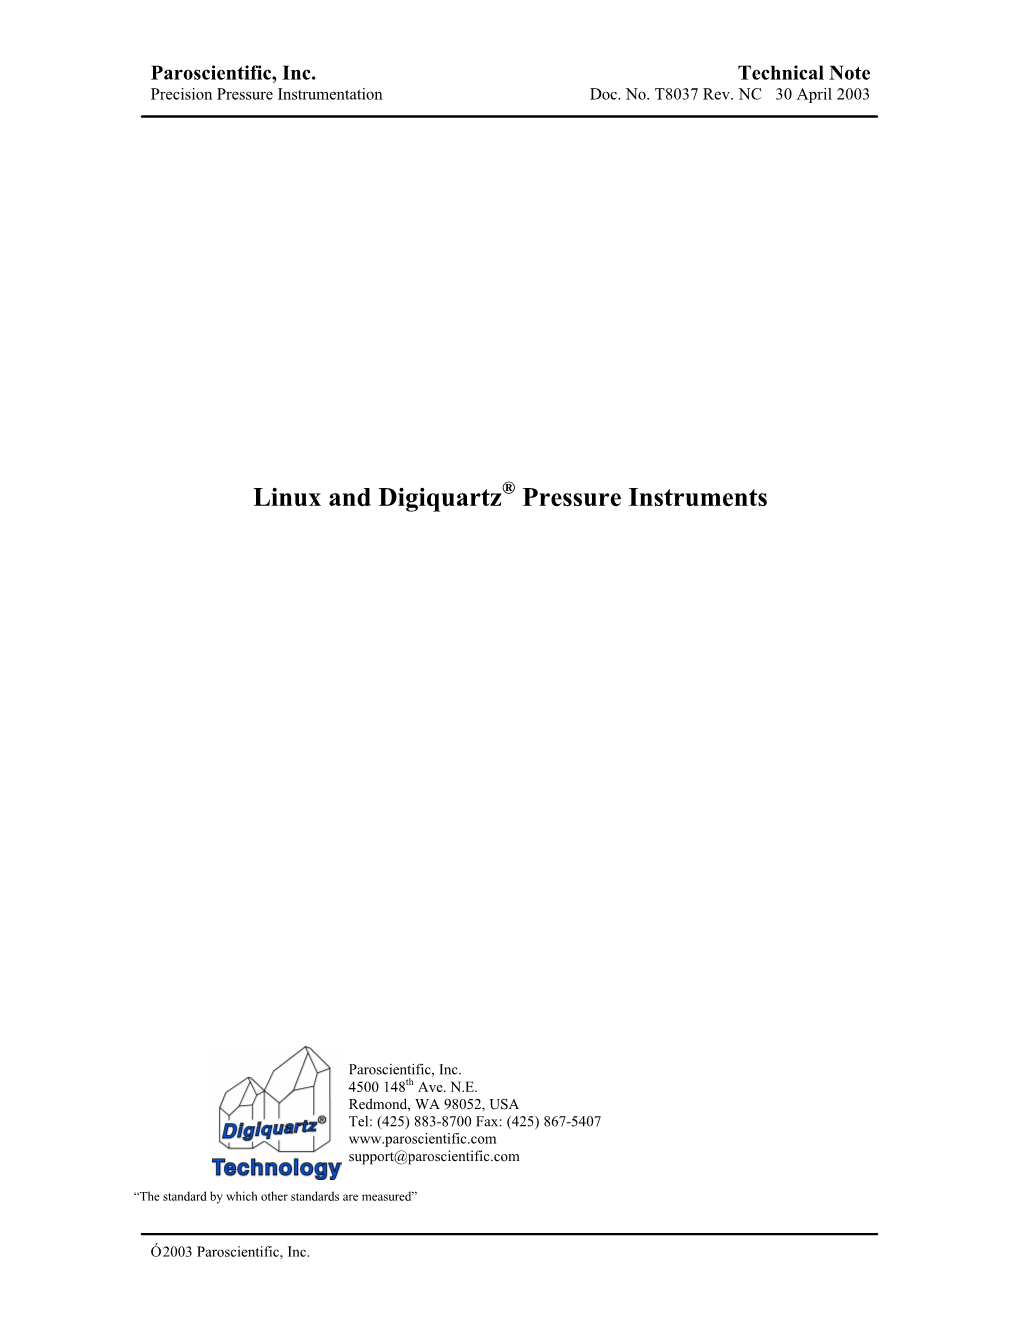 Linux and Digiquartz Pressure Instruments